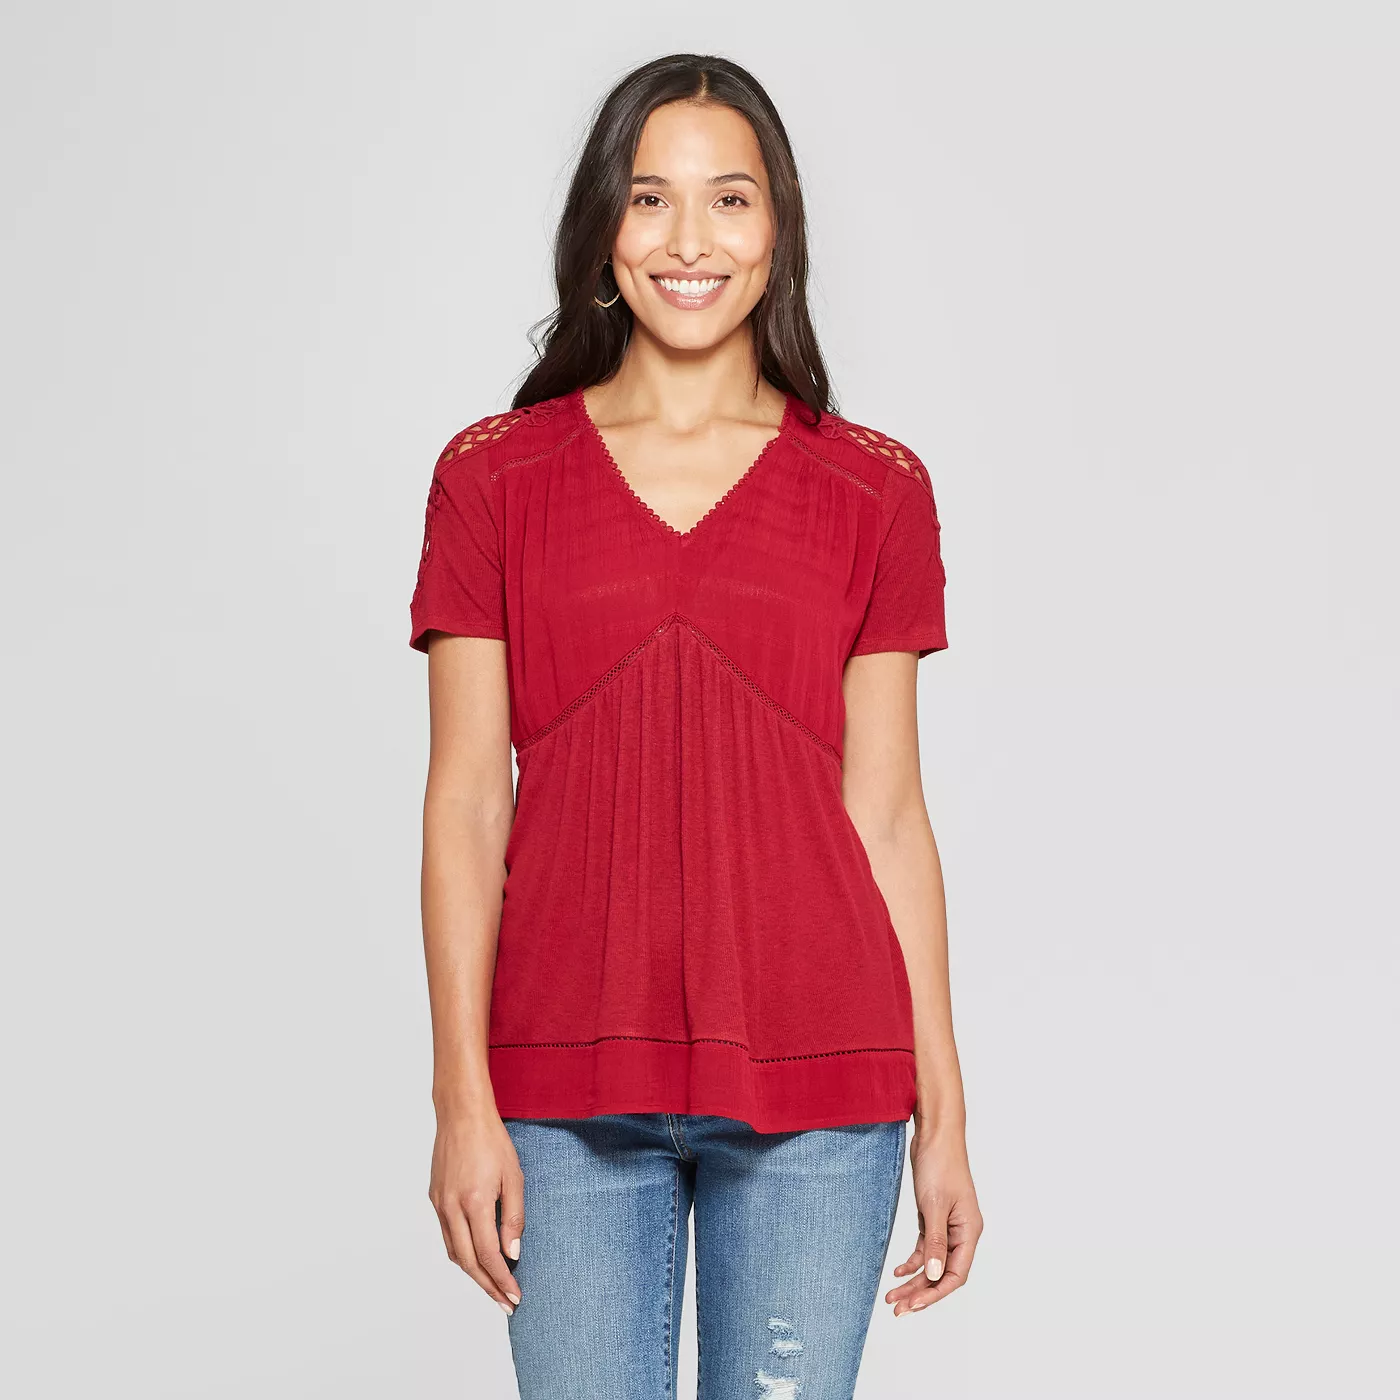 Women's Short Sleeve V-Neck Blouse - Knox Roseâ¢ Red - image 1 of 2